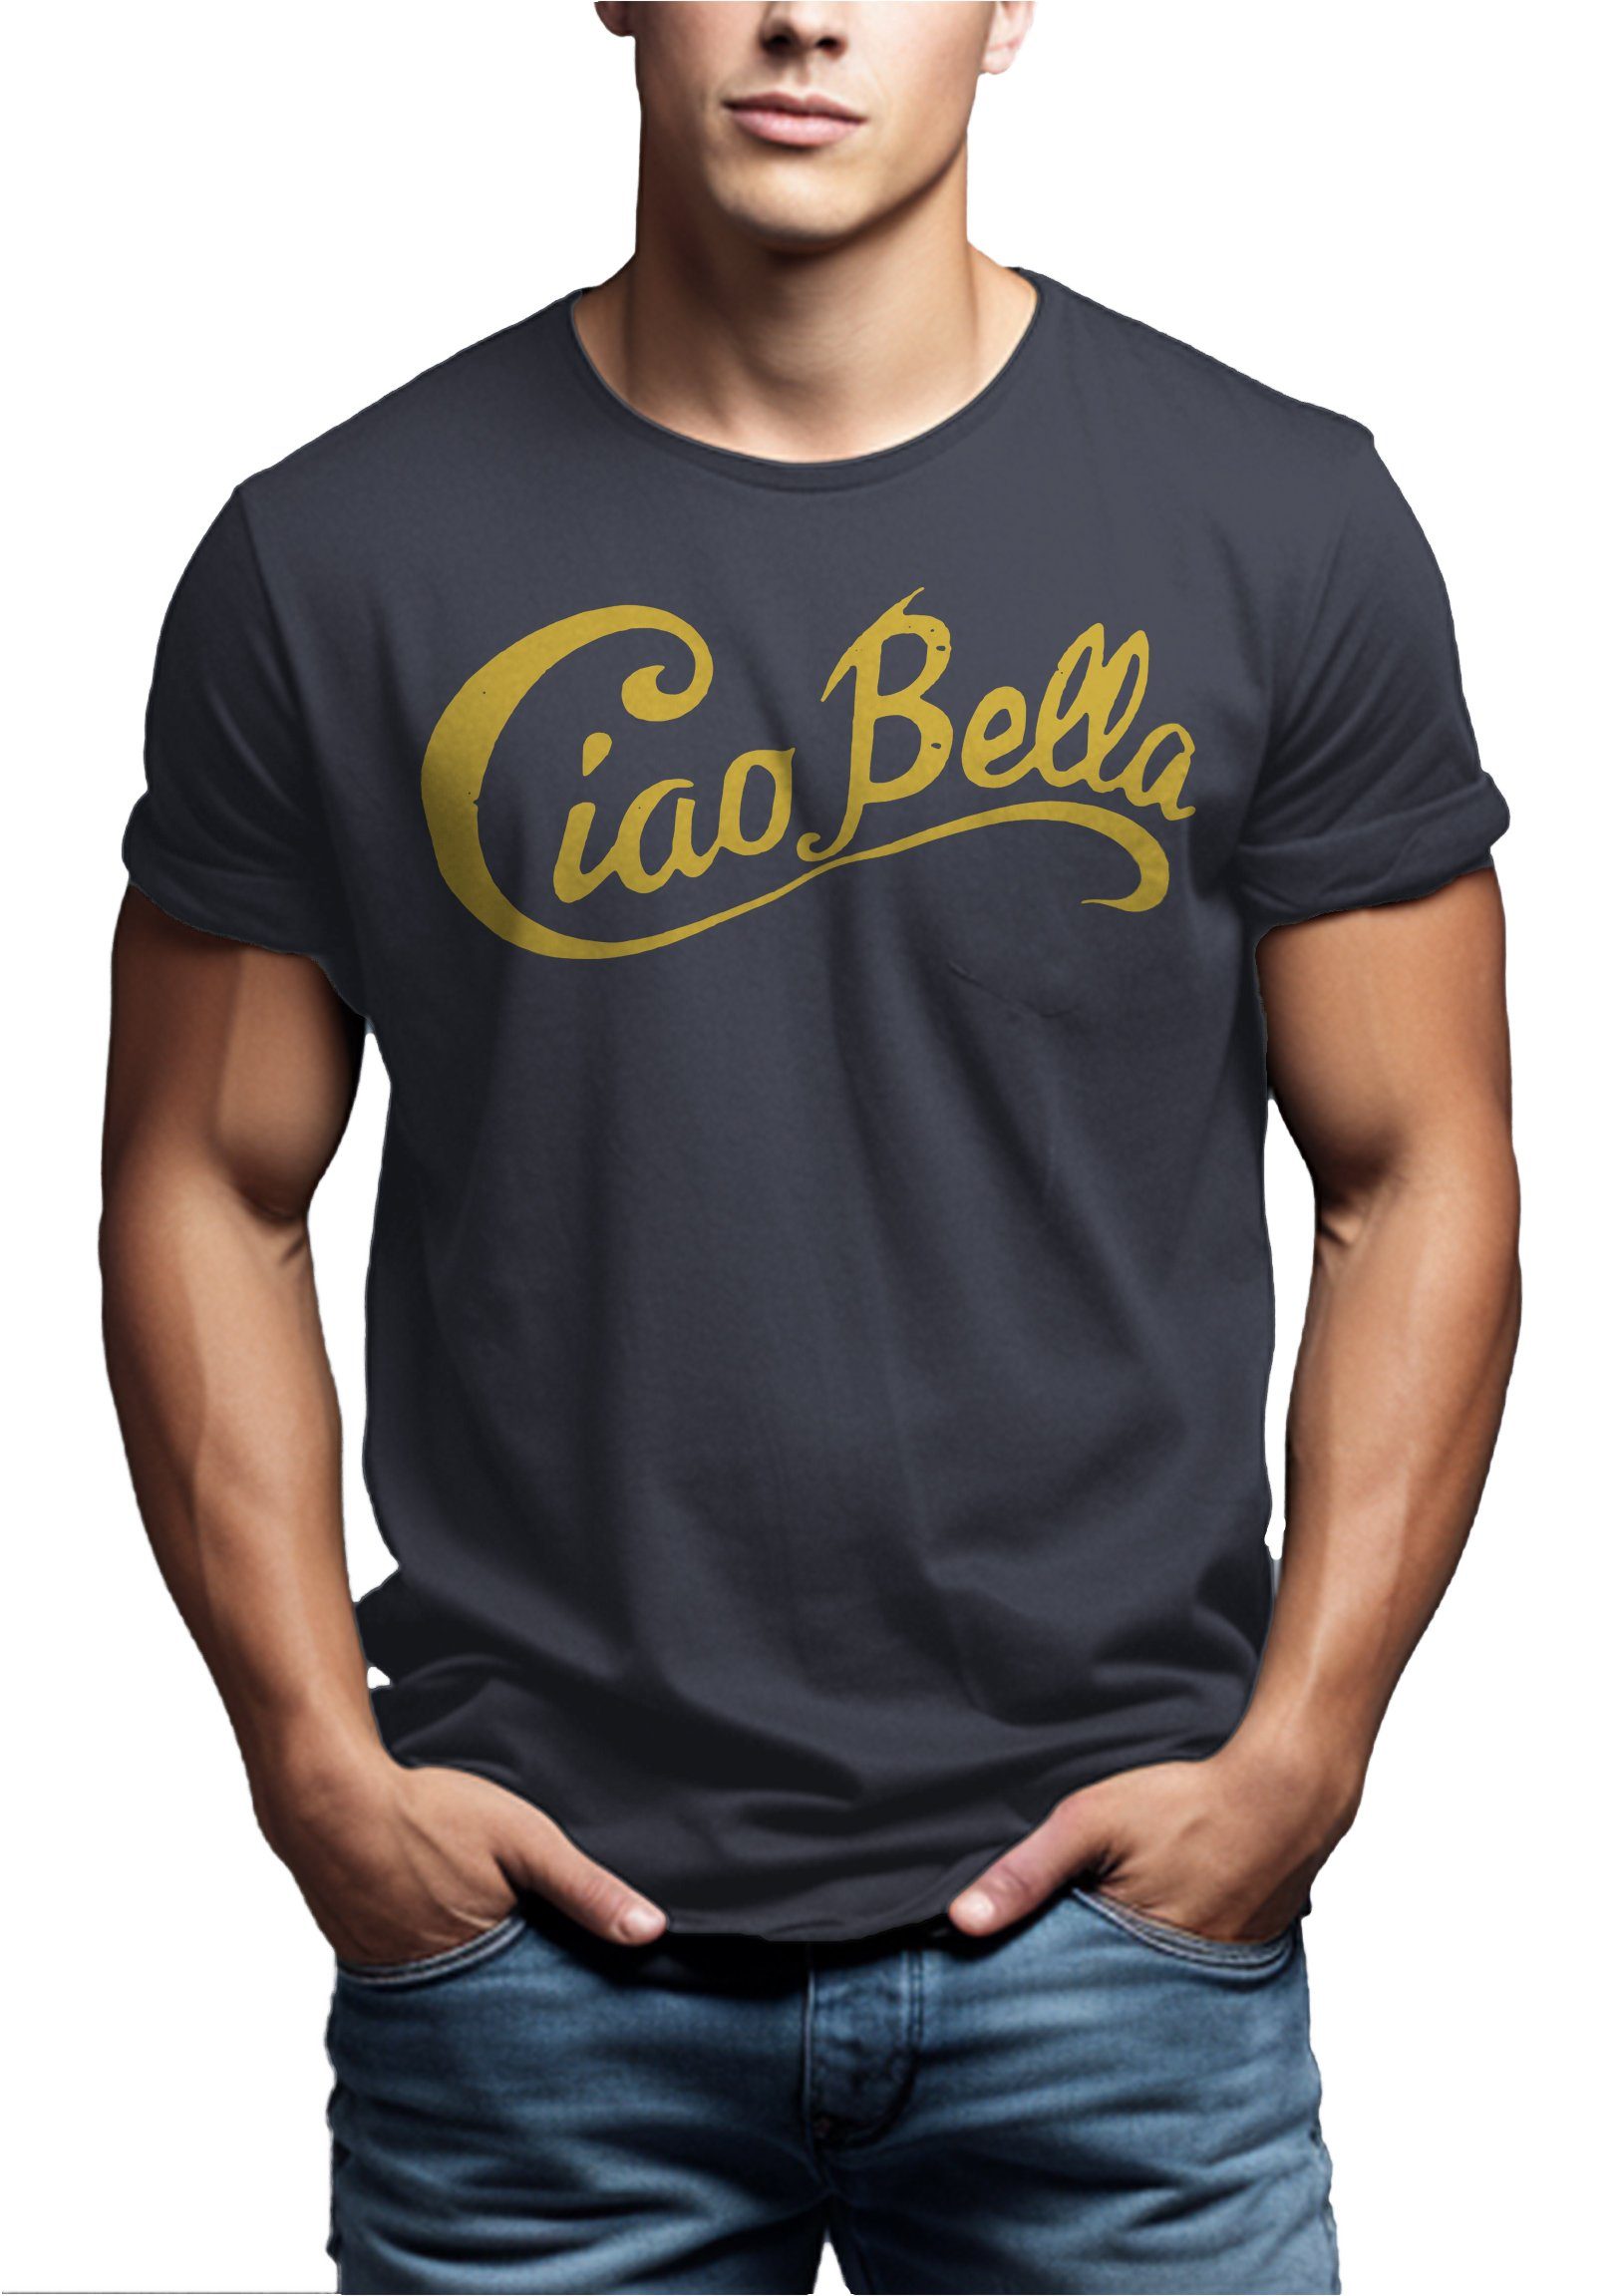 Motiv Blaugrau Mode Spruch Herren Ciao Bella Italien Print-Shirt MAKAYA Italienischer Coole Style Logo,